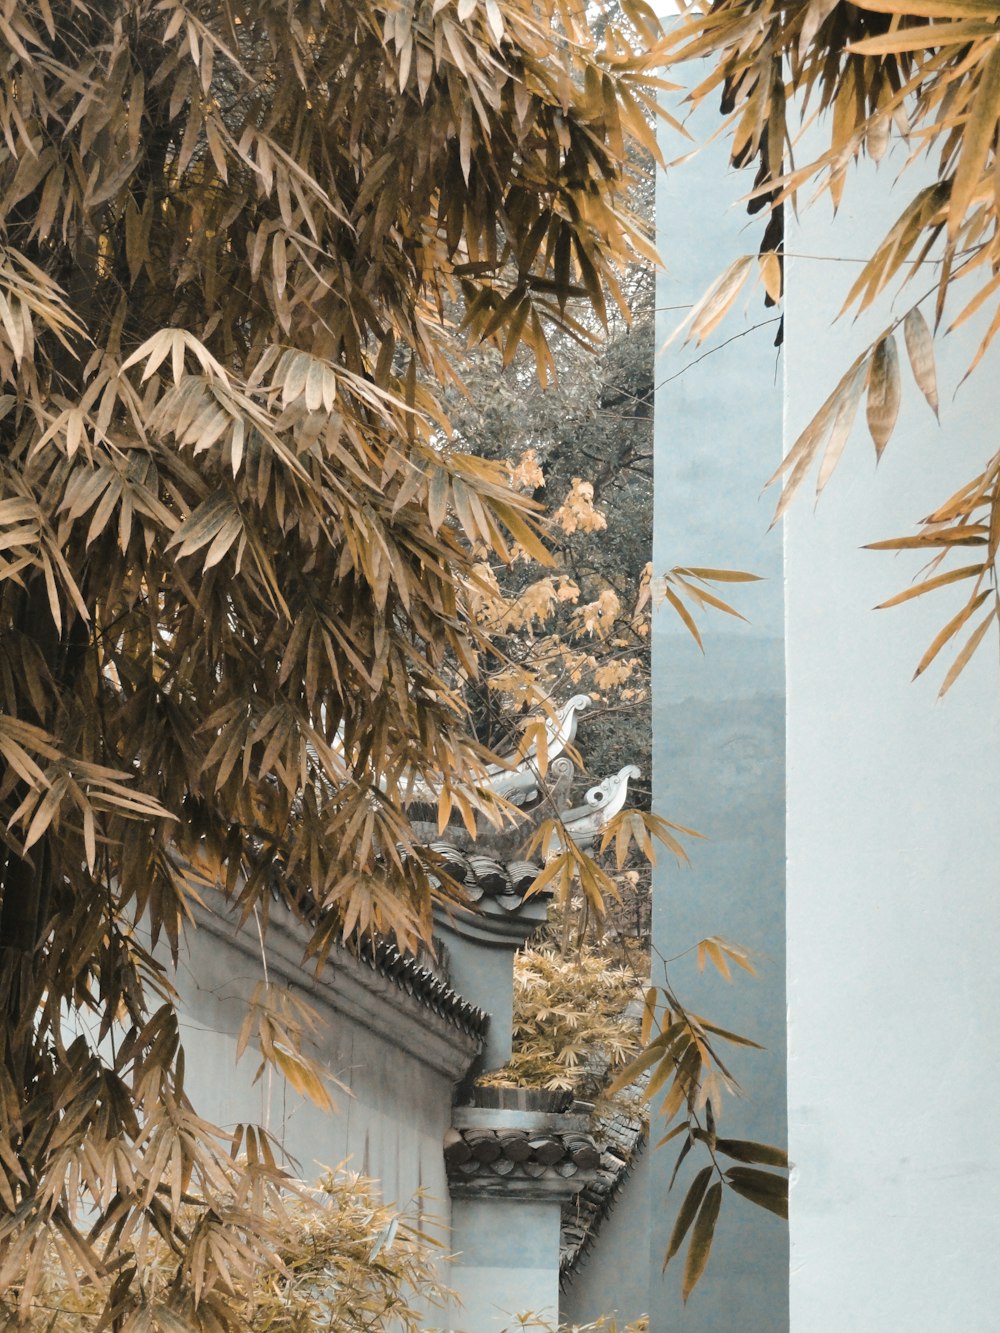 brown palm tree near gray concrete building